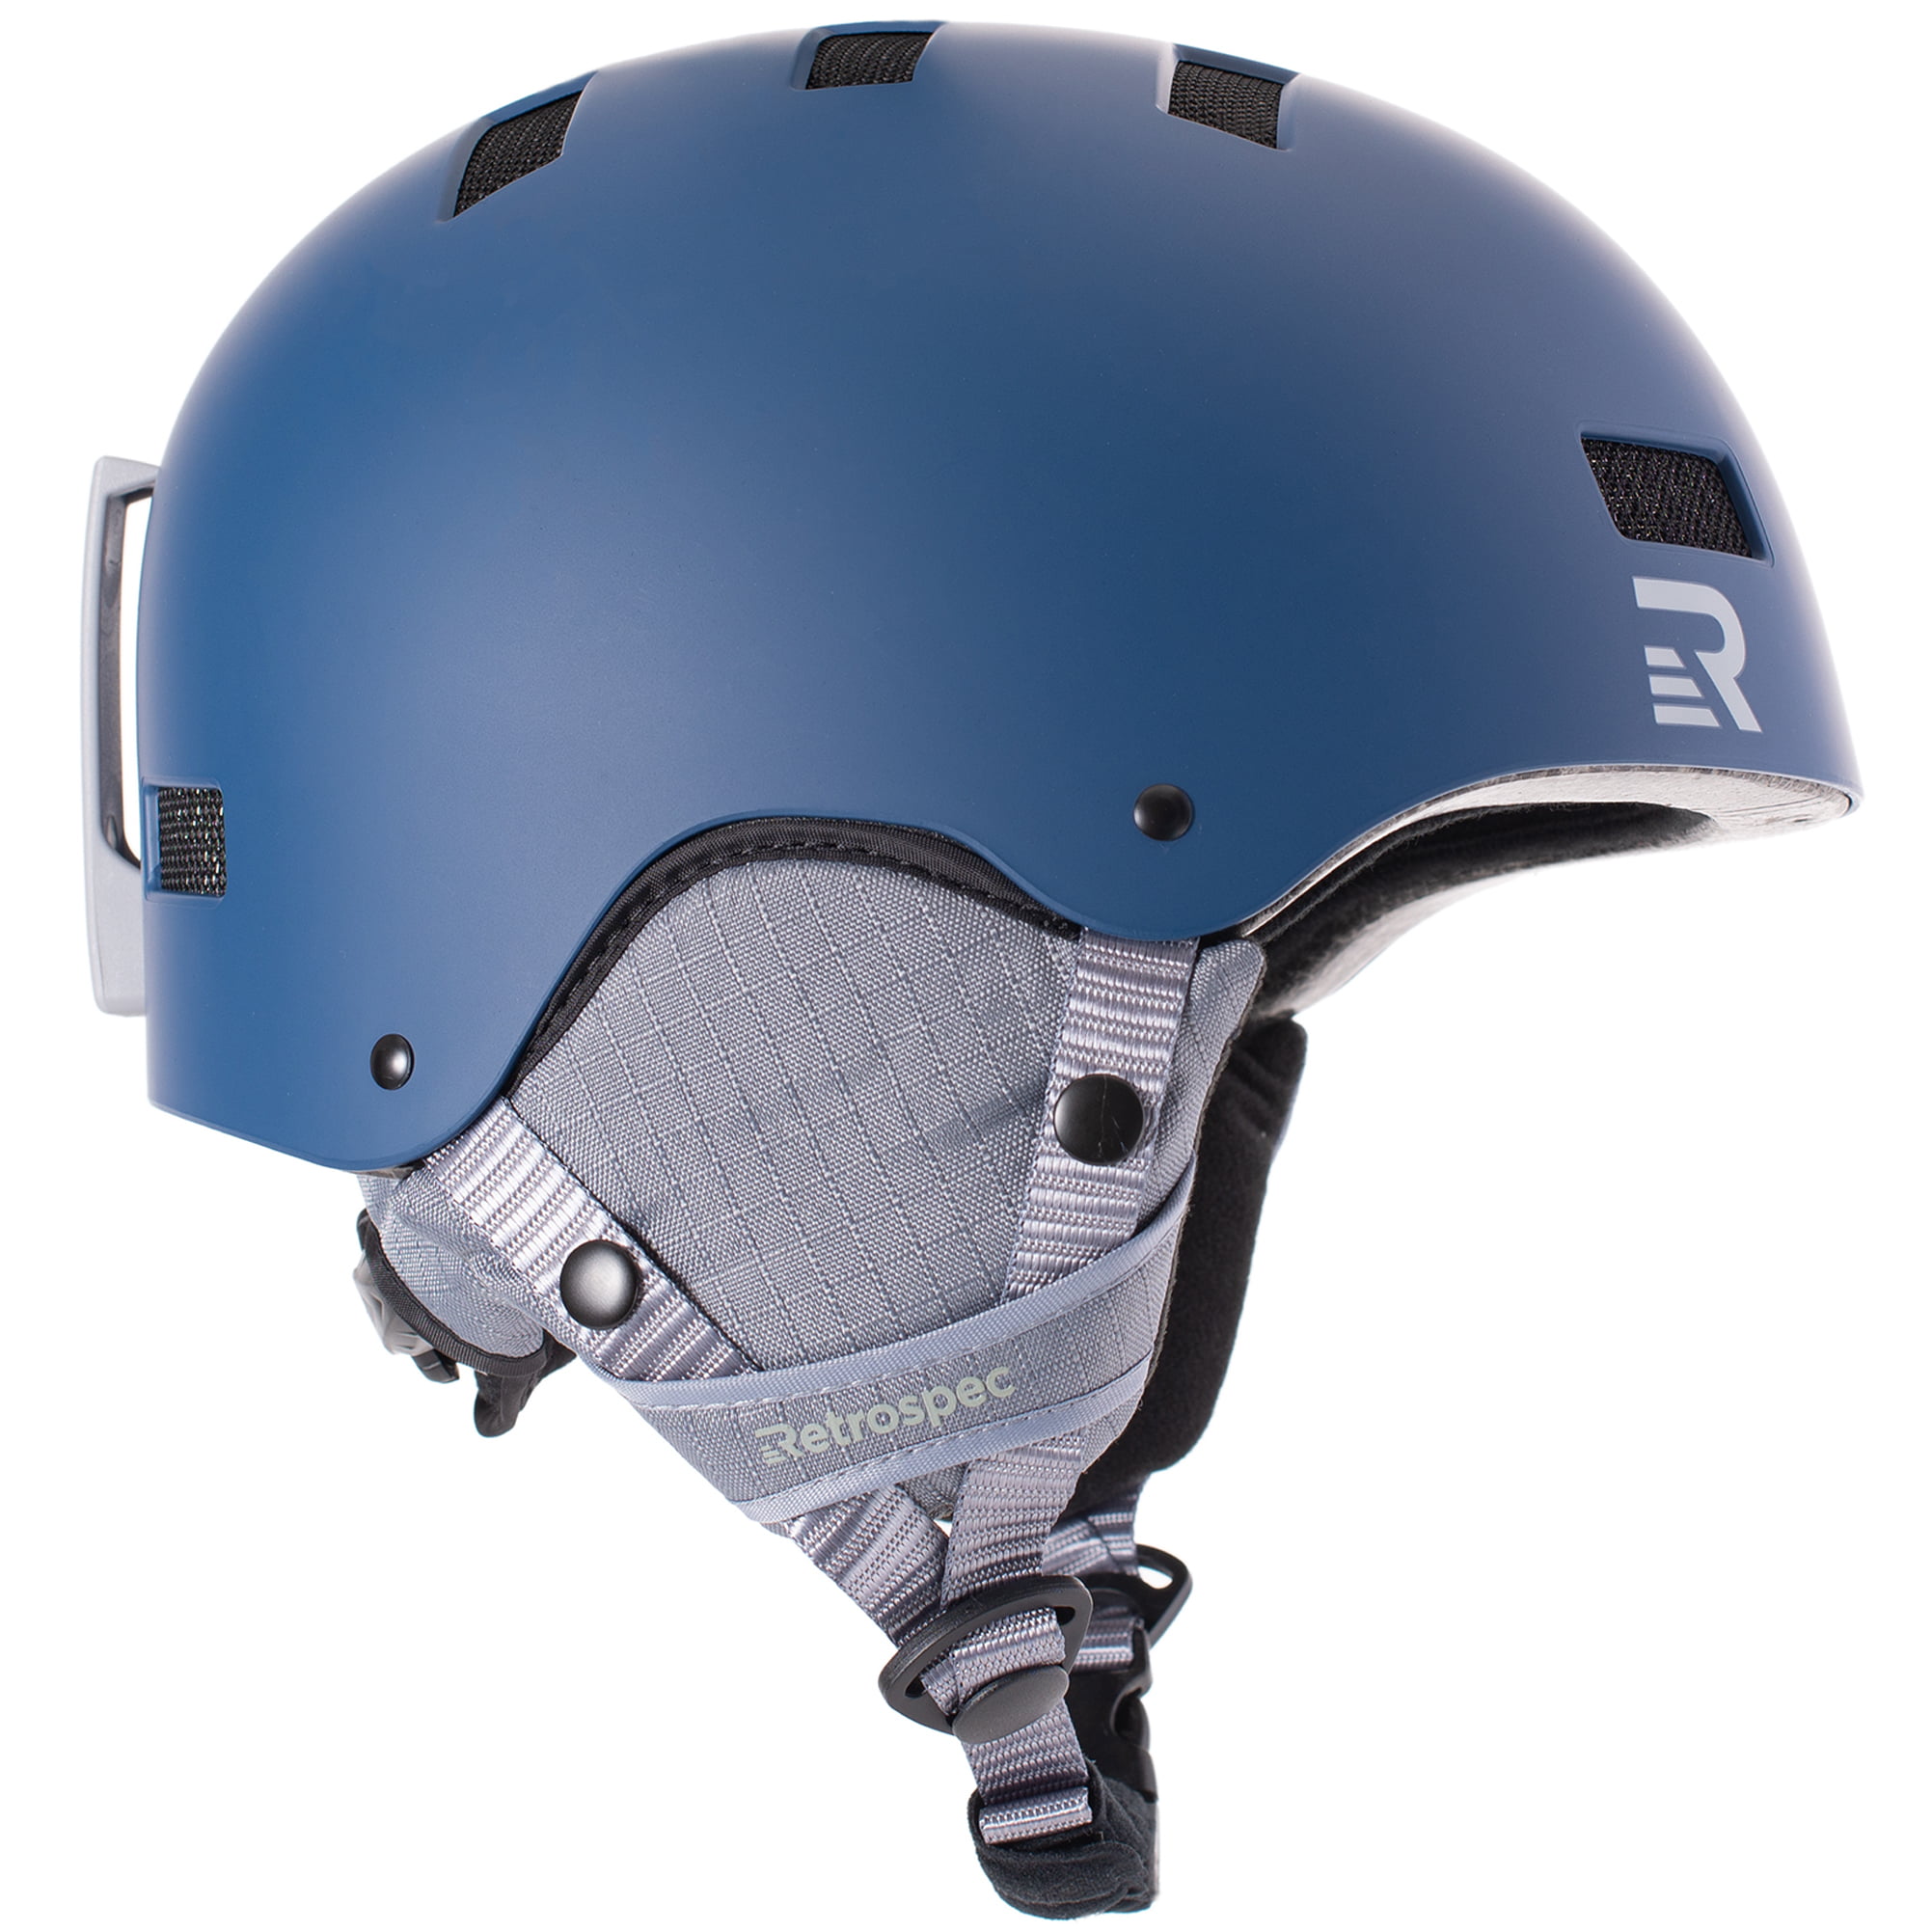 Retrospec Traverse H1 2-in-1 Convertible Ski & Snowboard / Bike & Skate  Helmet with 10 vents